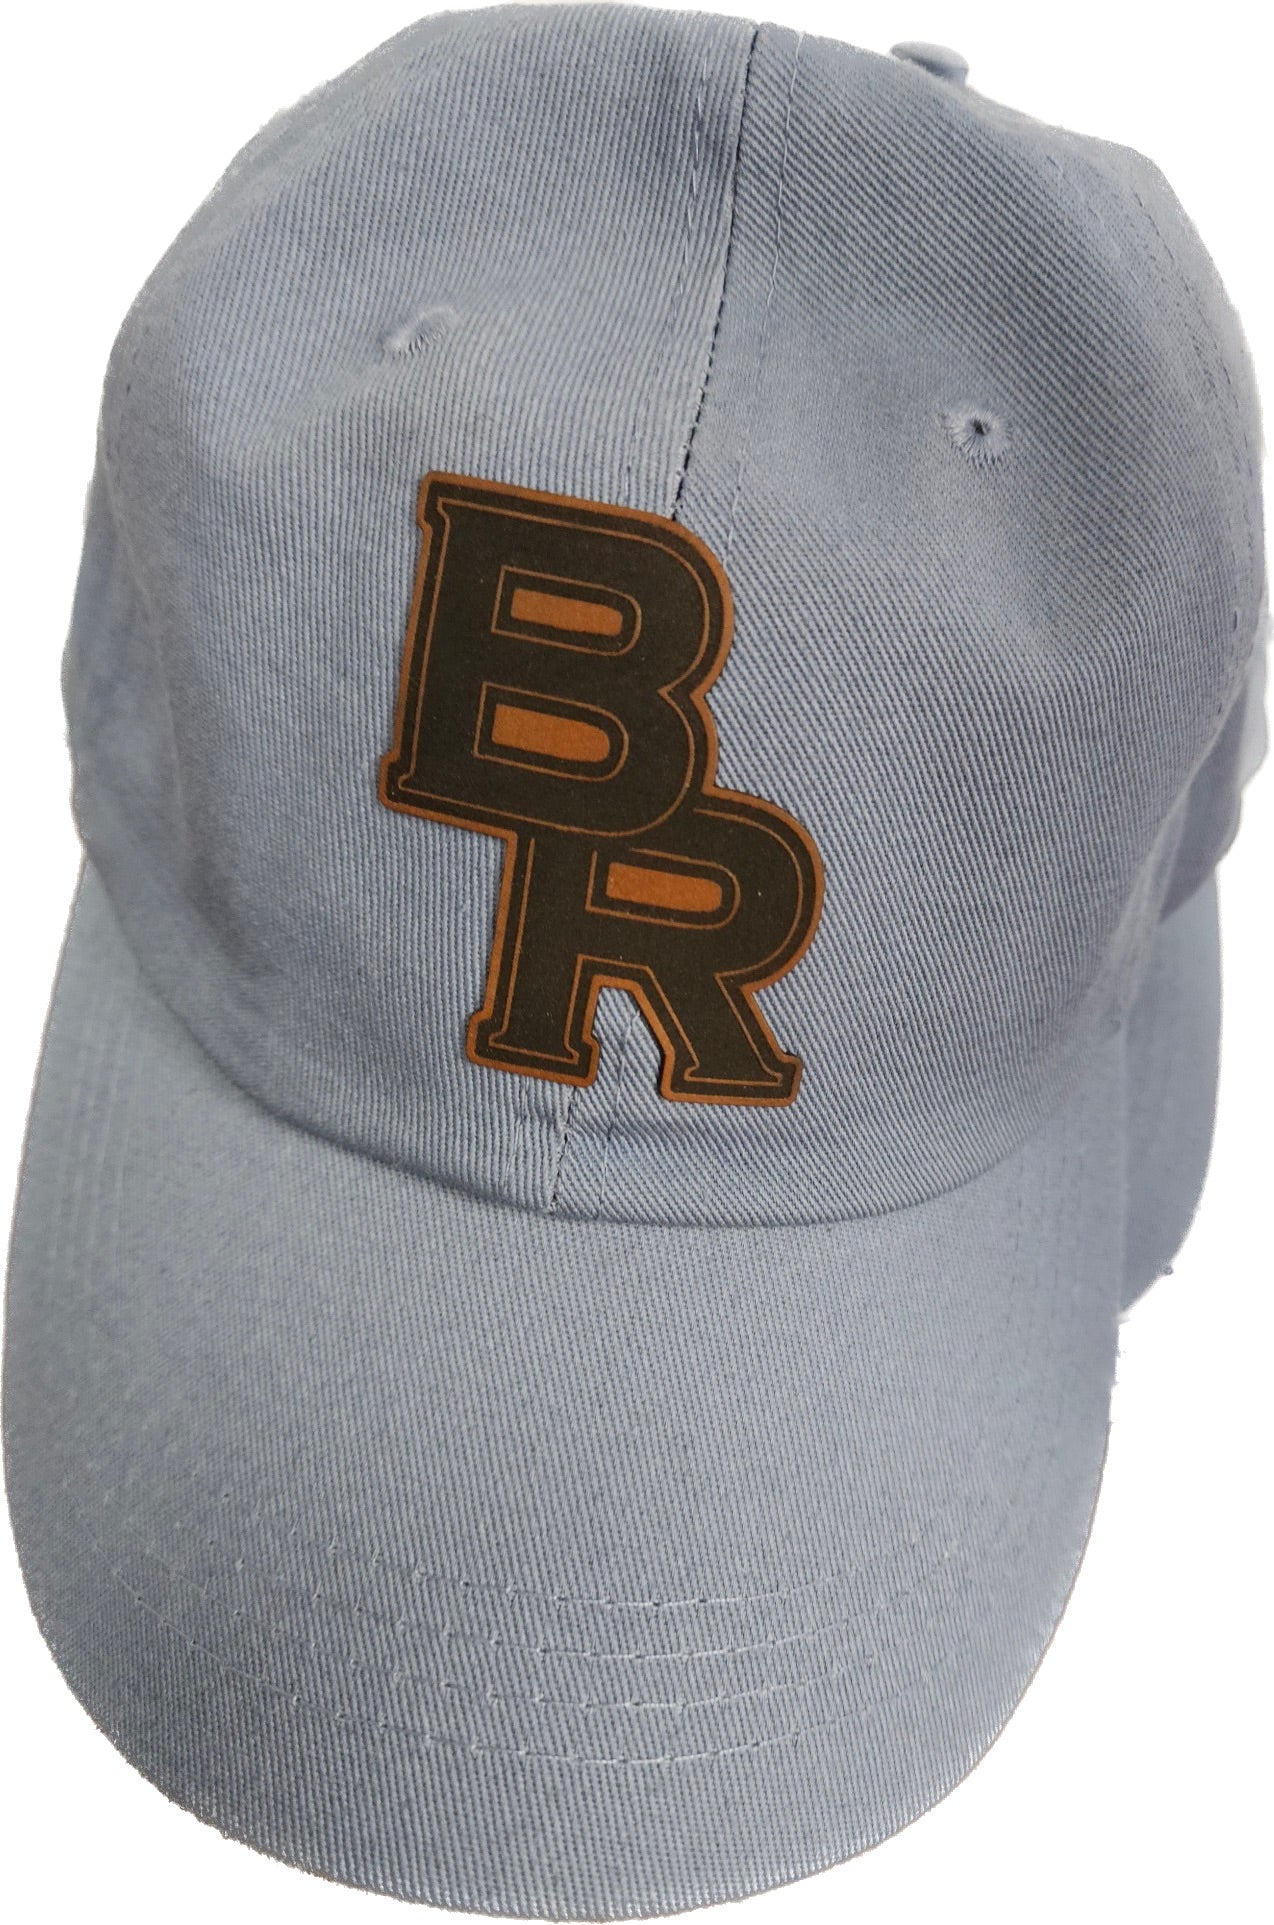 Big Rapids Leather Patch Hats